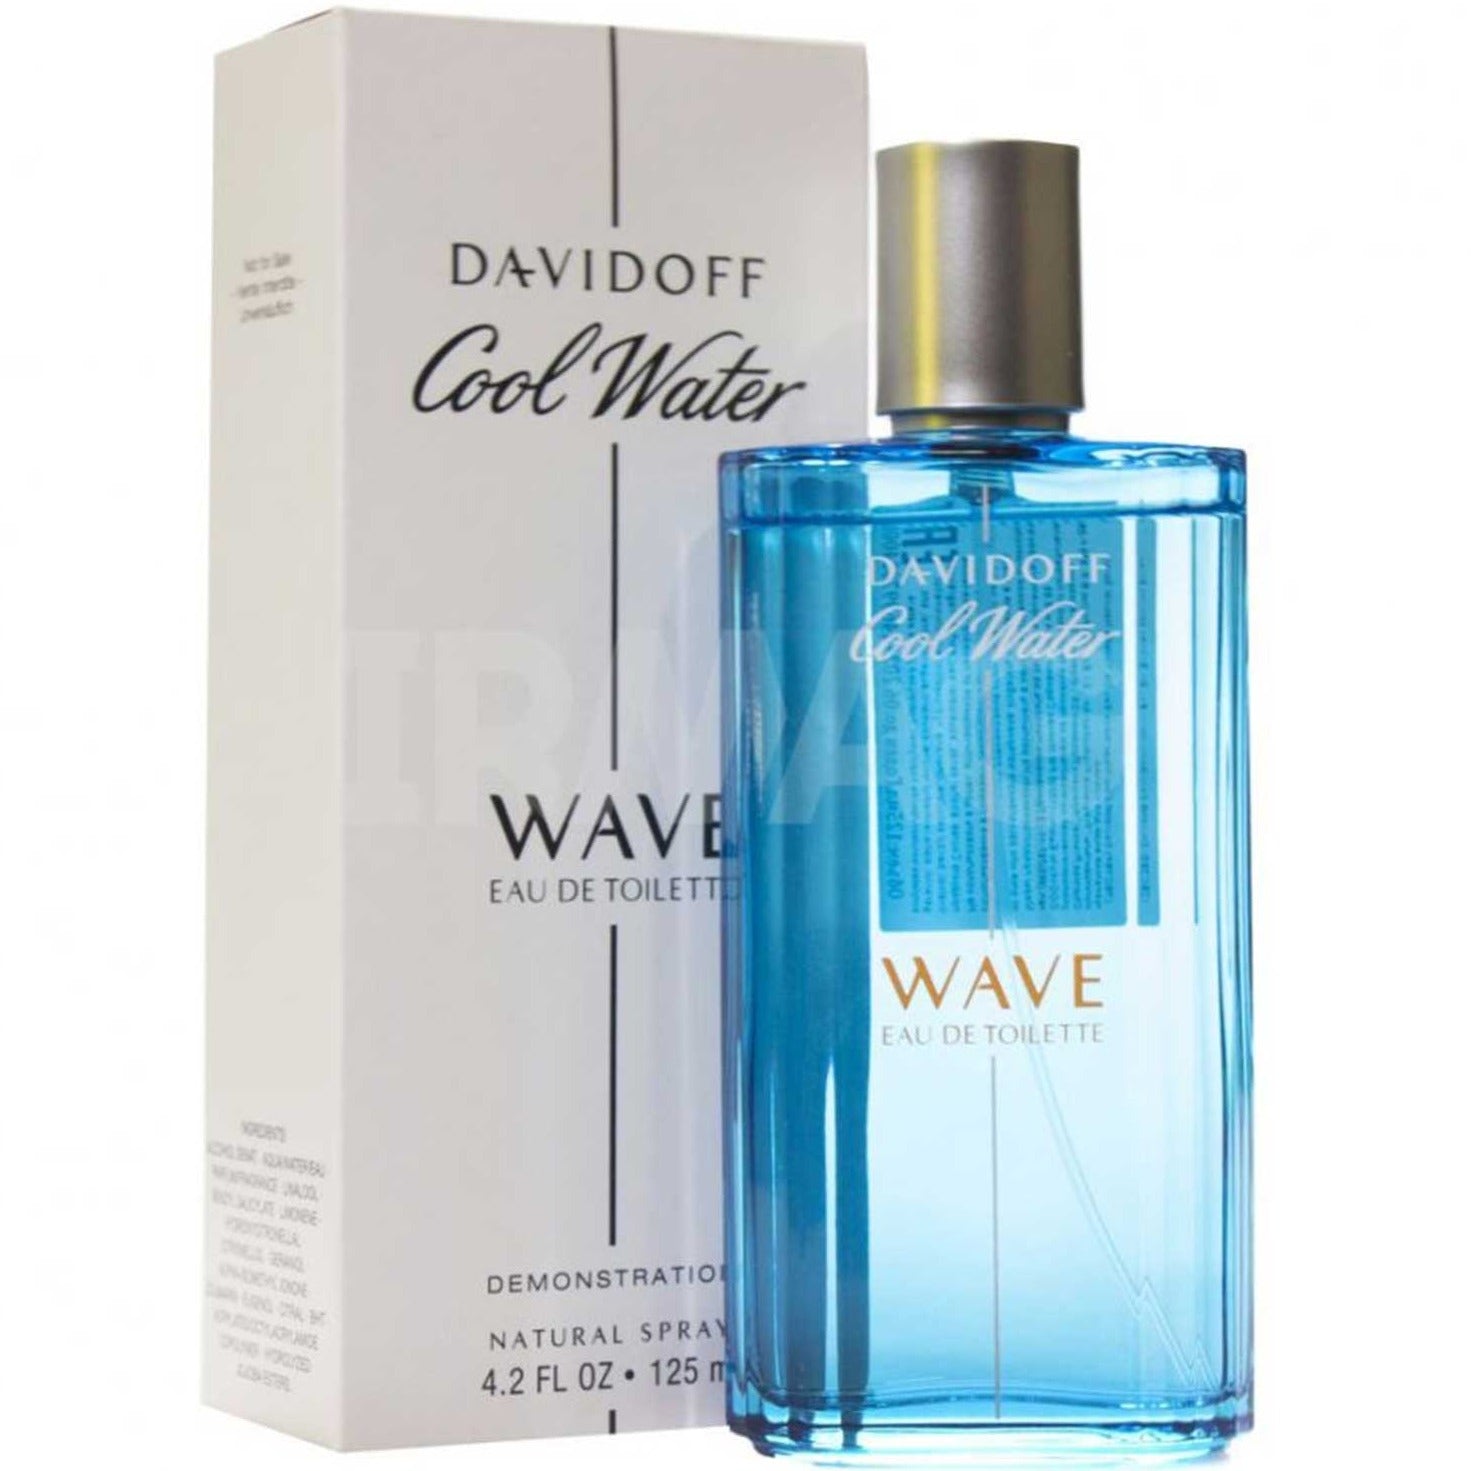 Davidoff Cool Water Wave EDT | My Perfume Shop Australia